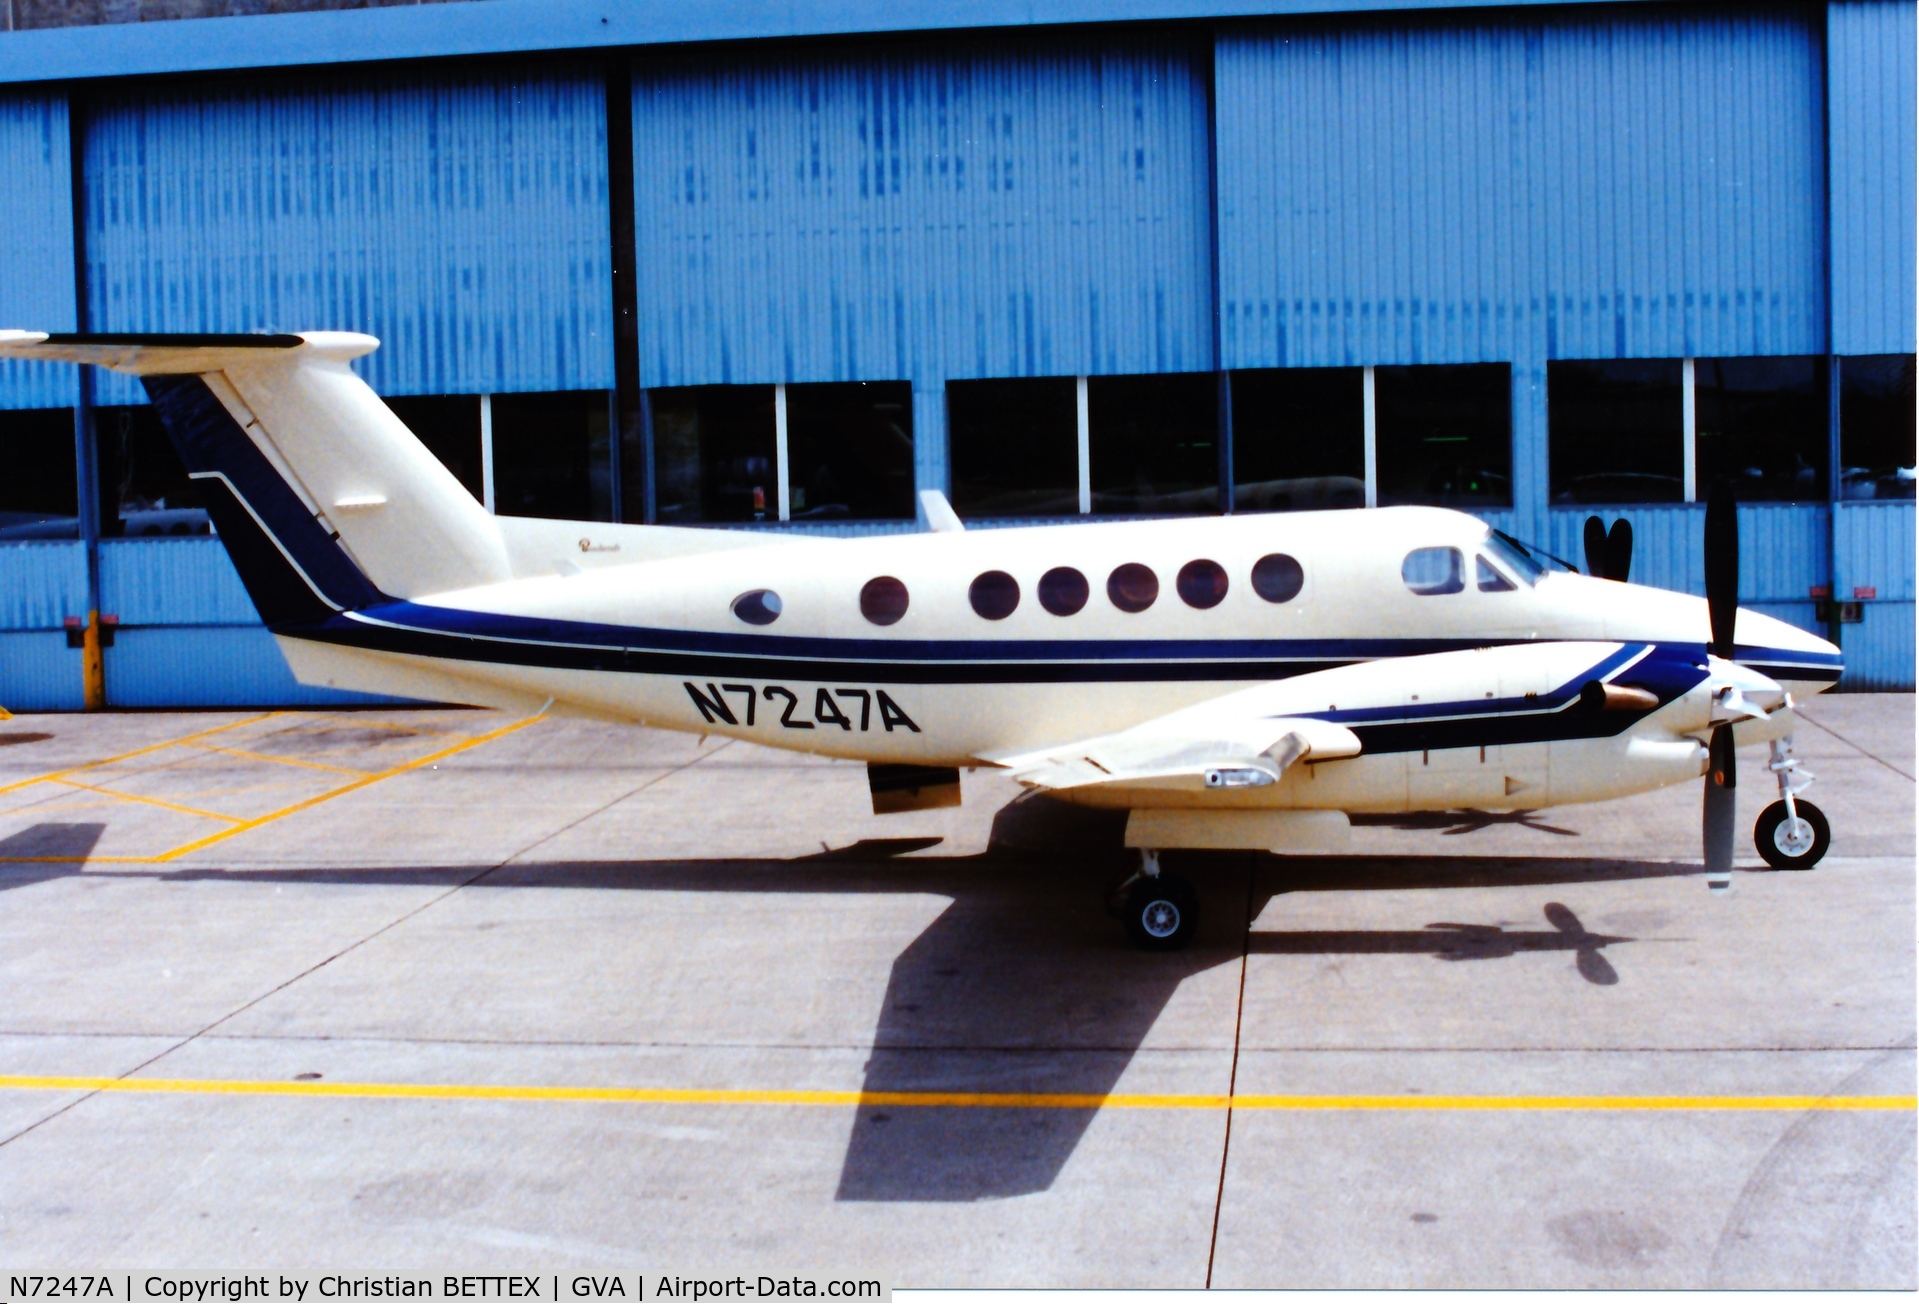 N7247A, 1985 Beech 300 C/N FA-75, Overhauled by TRANSAIRCO GVA, after crash in mai 1988